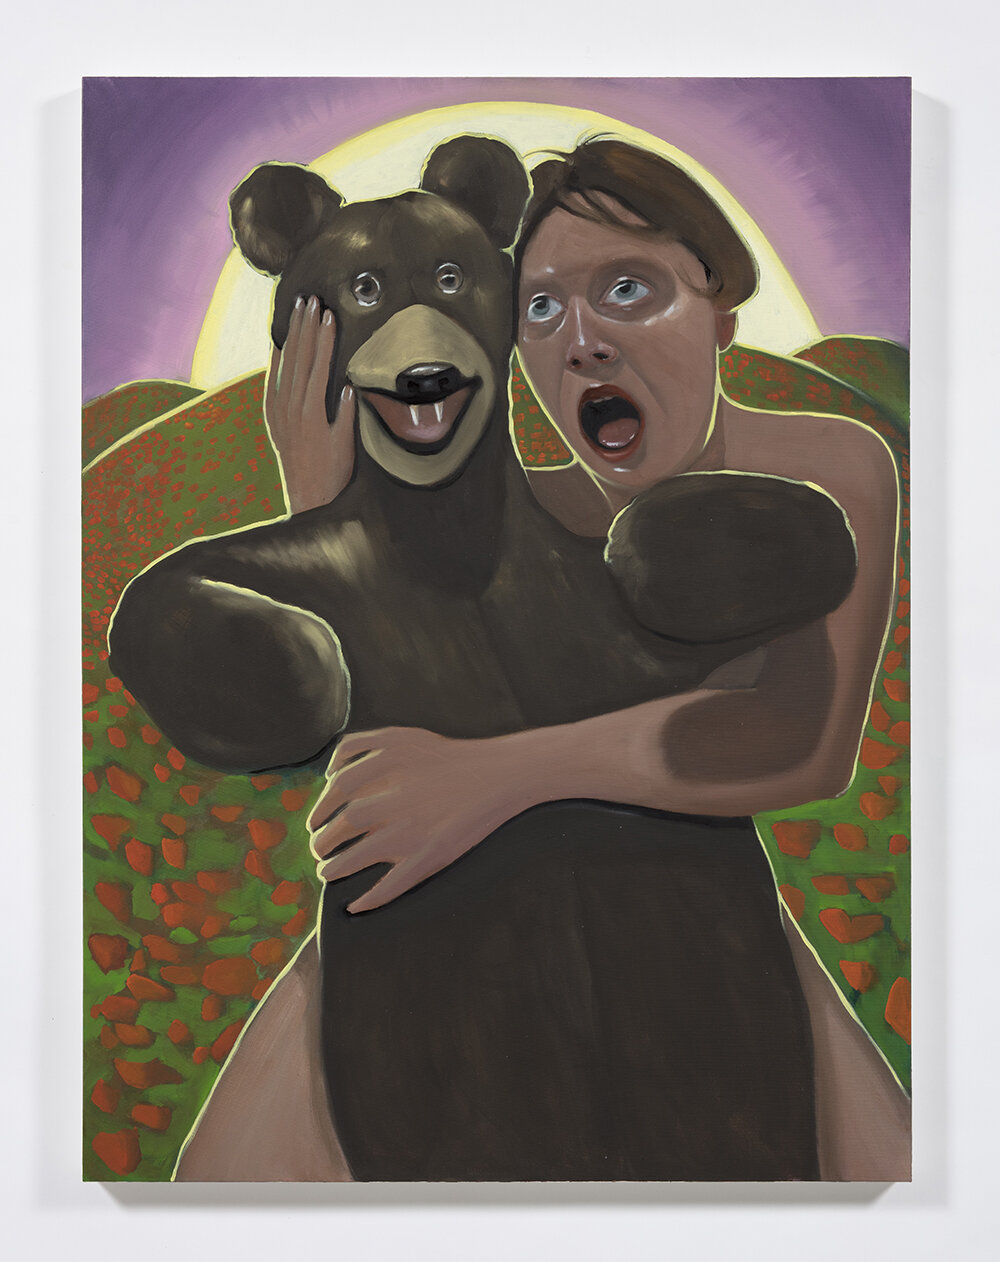 ‘Awakening baby bear’ 2019 Oil on canvas 48 x 36” photo by Don lewis .jpg